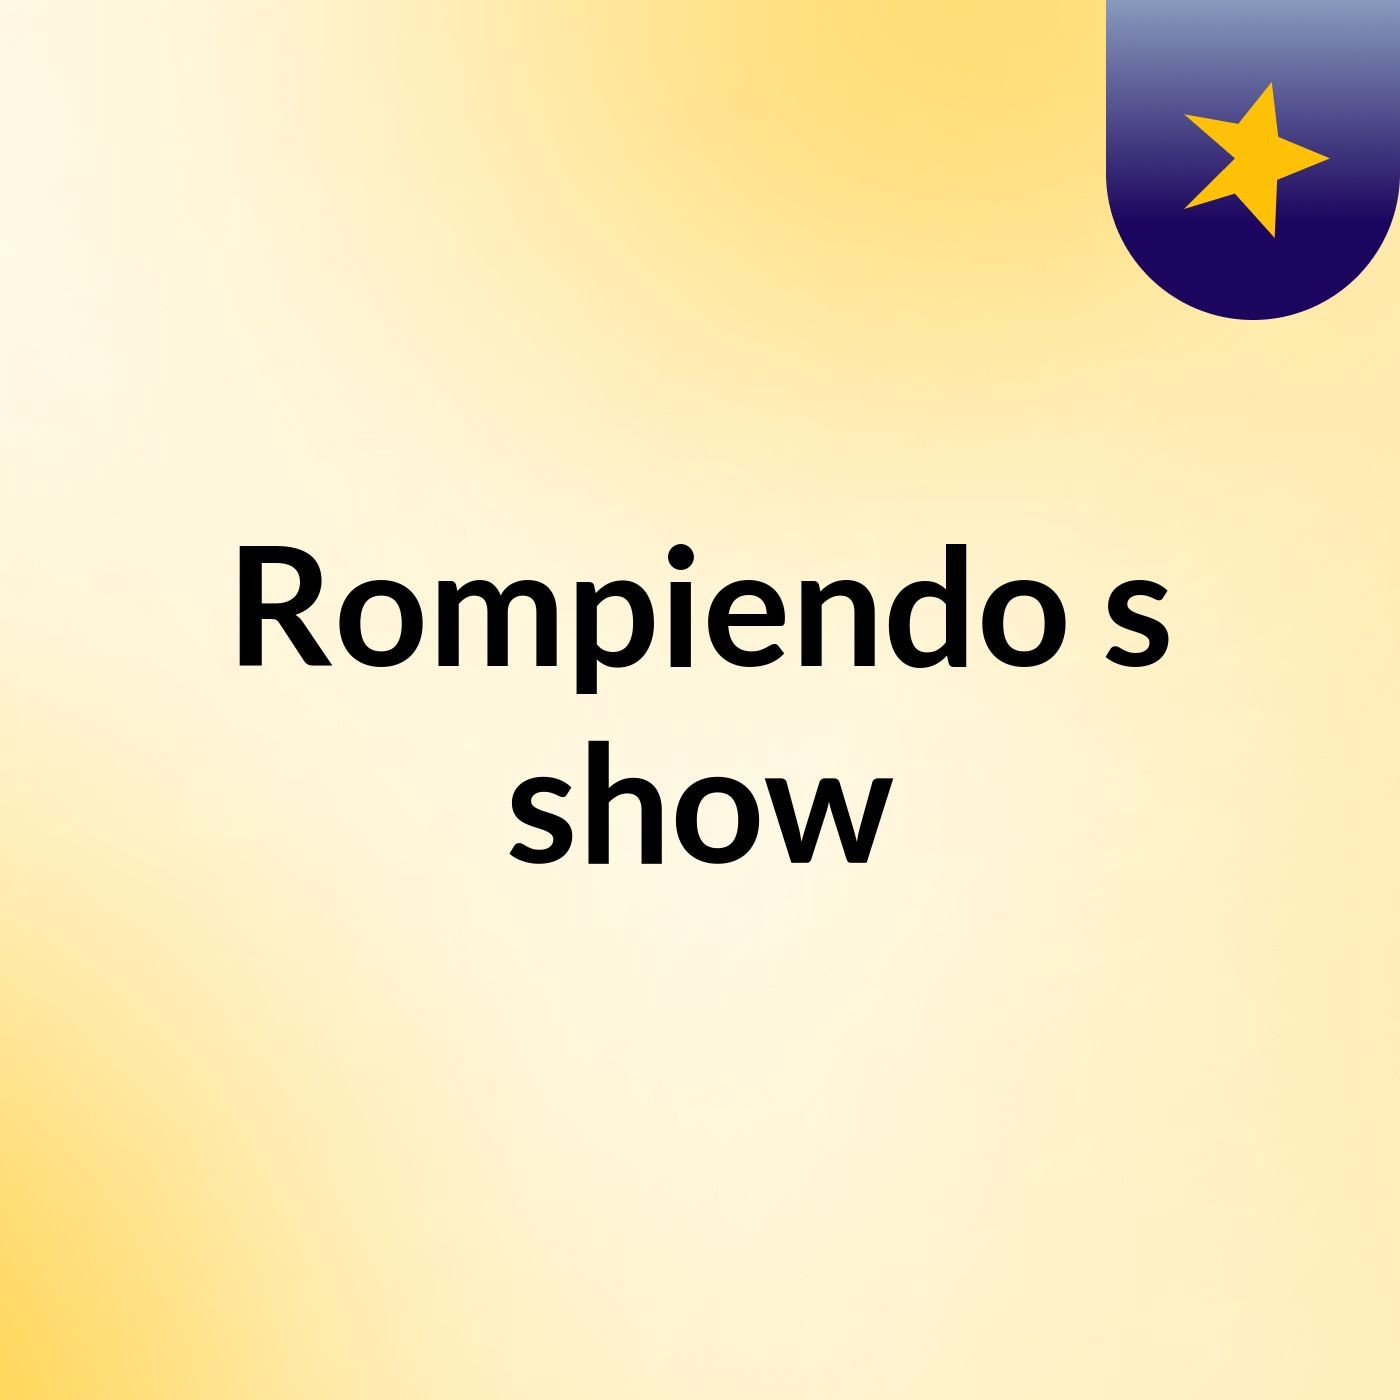 Rompiendo's show